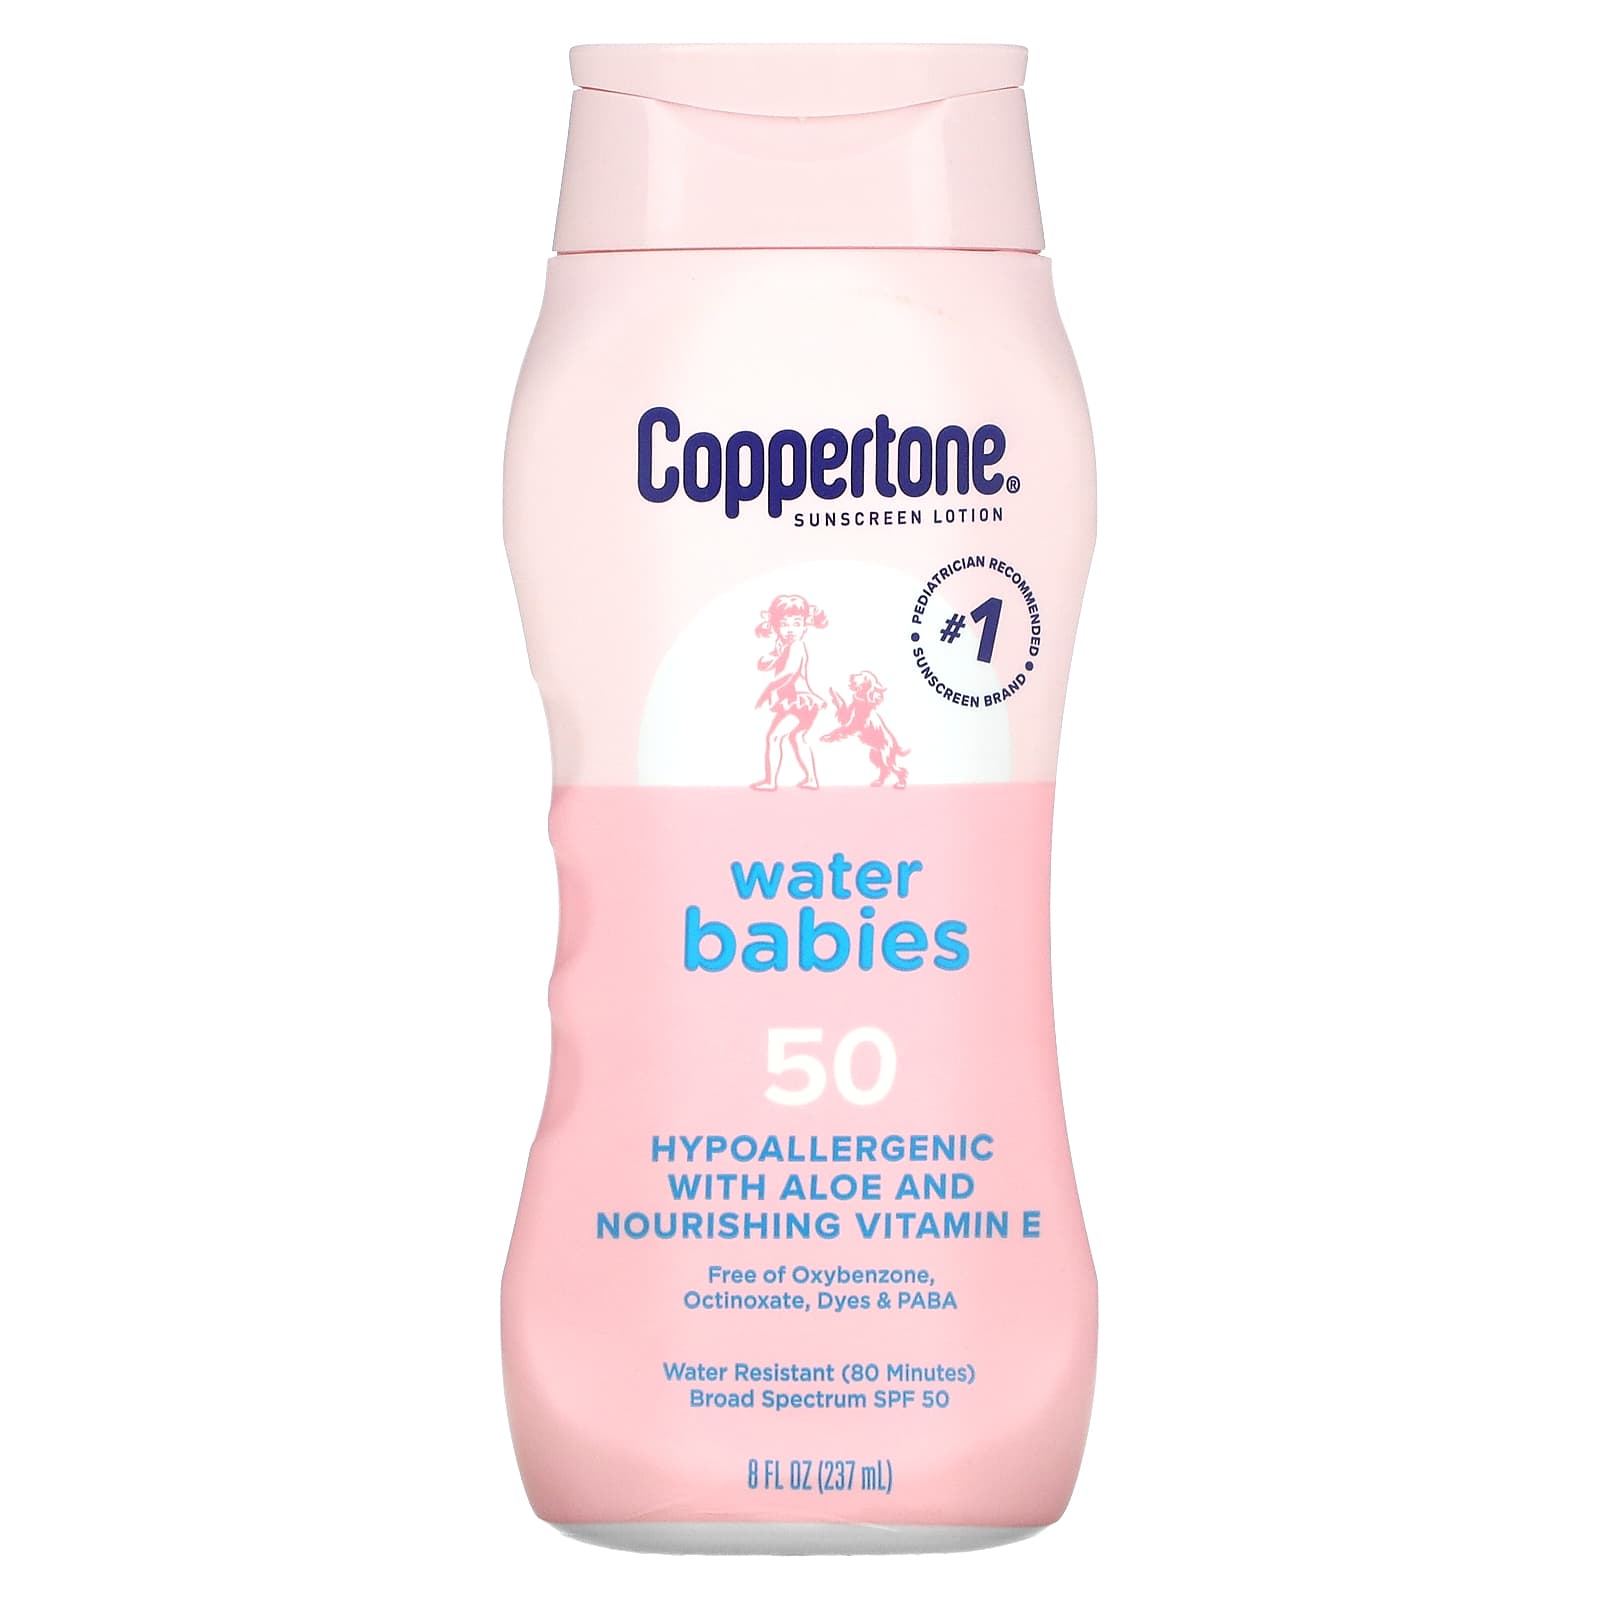 Солнцезащитный Лосьон Coppertone Water Babies SPF 50, 237 мл coppertone солнцезащитный лосьон water babies spf 50 237 мл 8 жидк унций